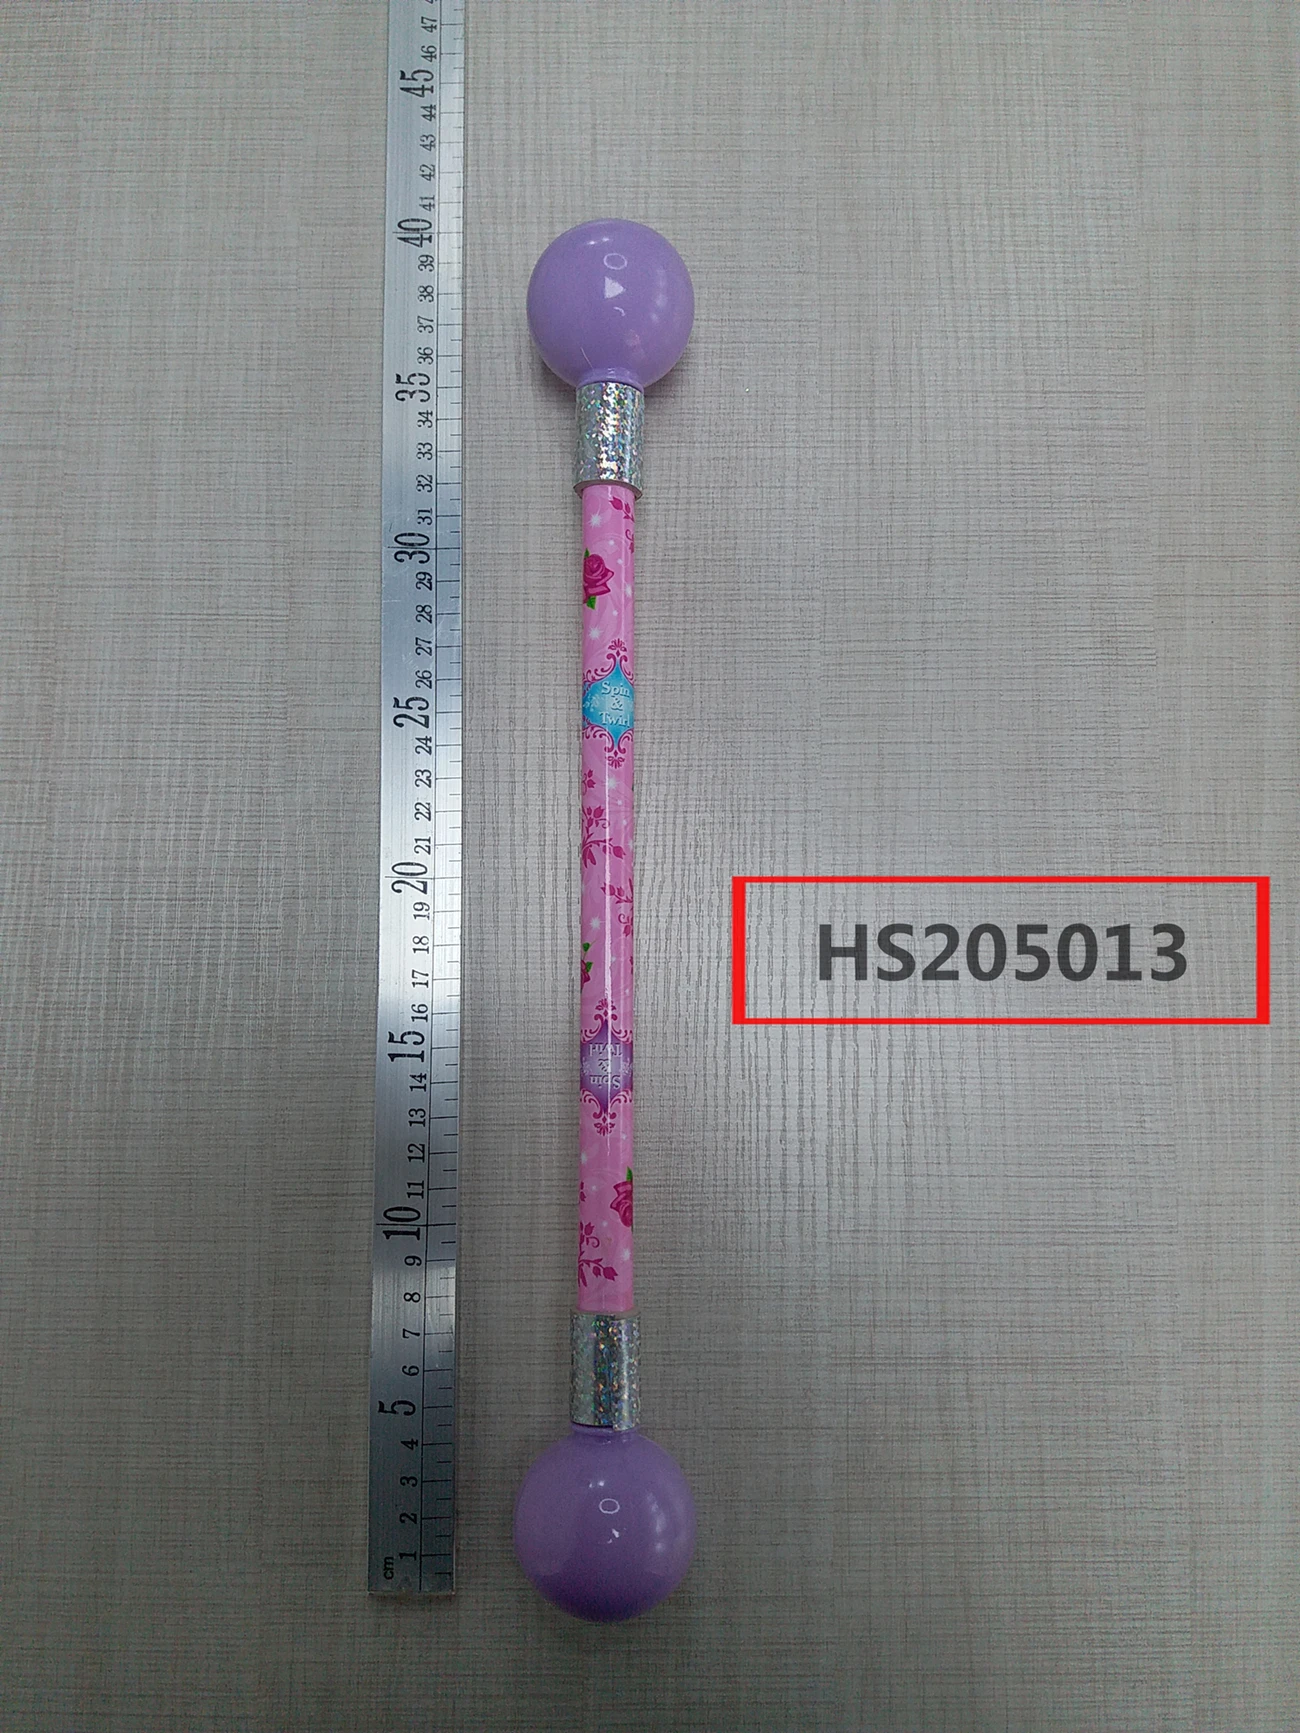 HS205013, Huwsin Toys,  Cheer leader Plastic Baton twirl toy